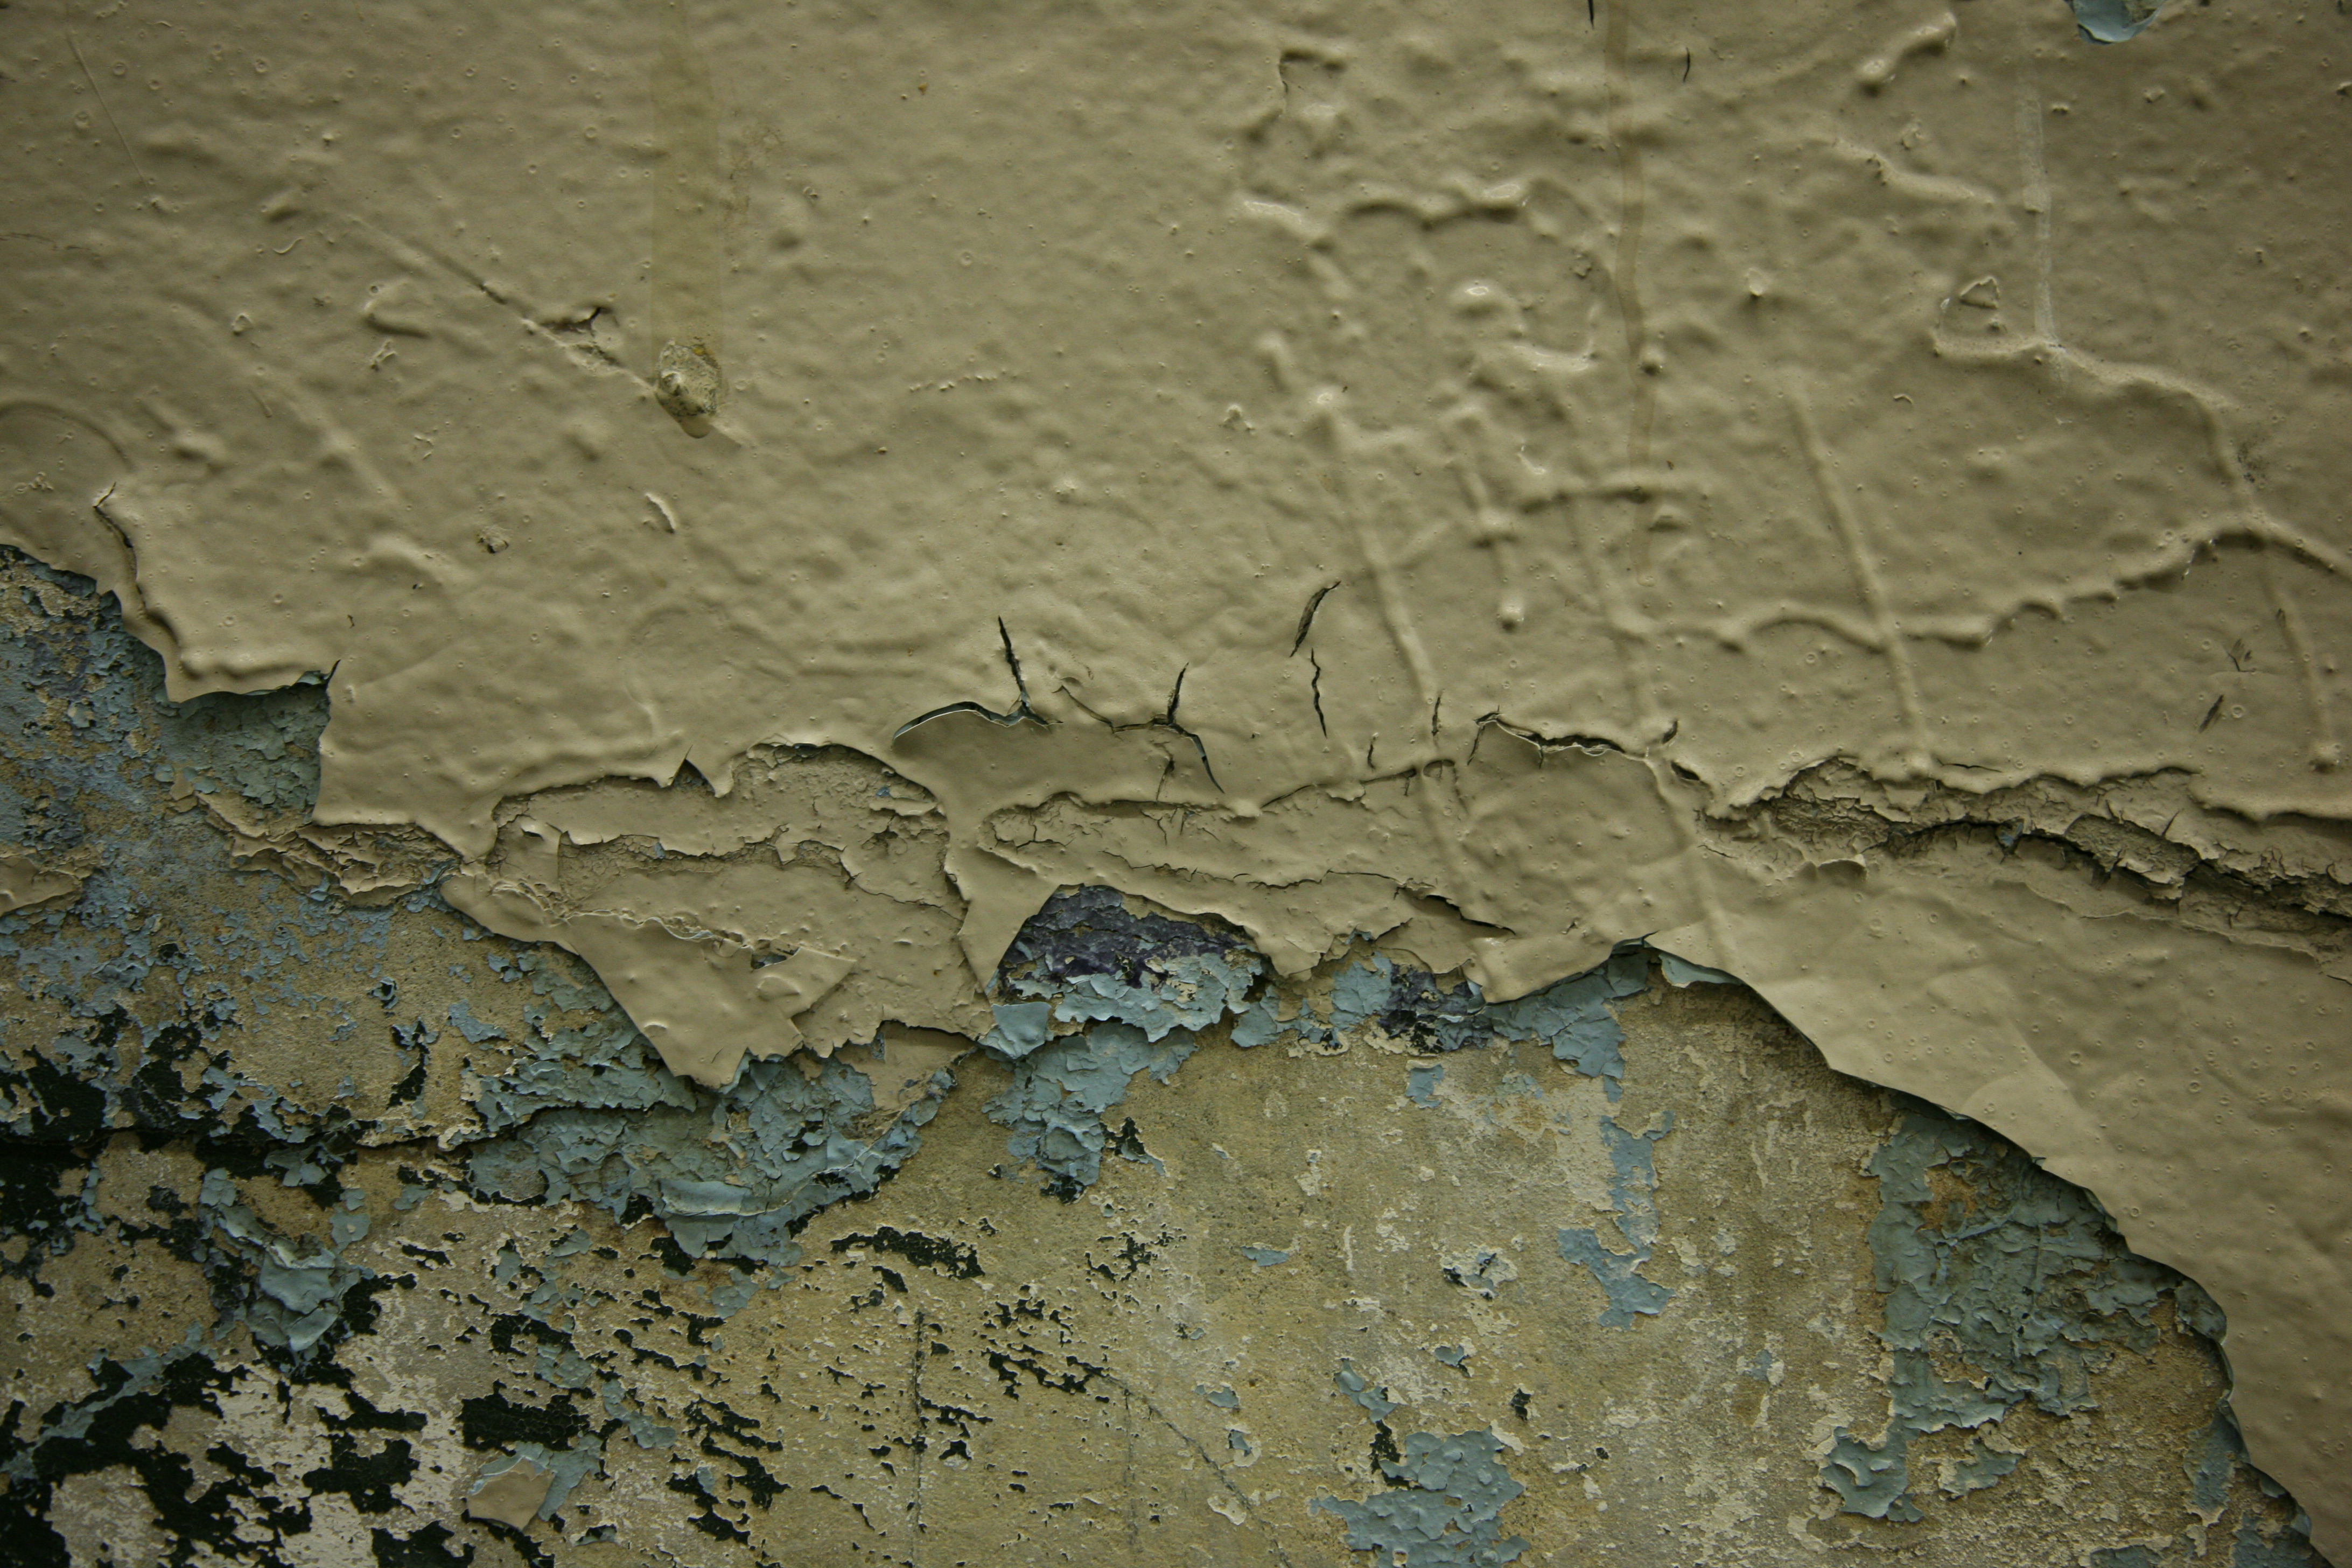 File:Peeling paint 2.jpg - Wikimedia Commons